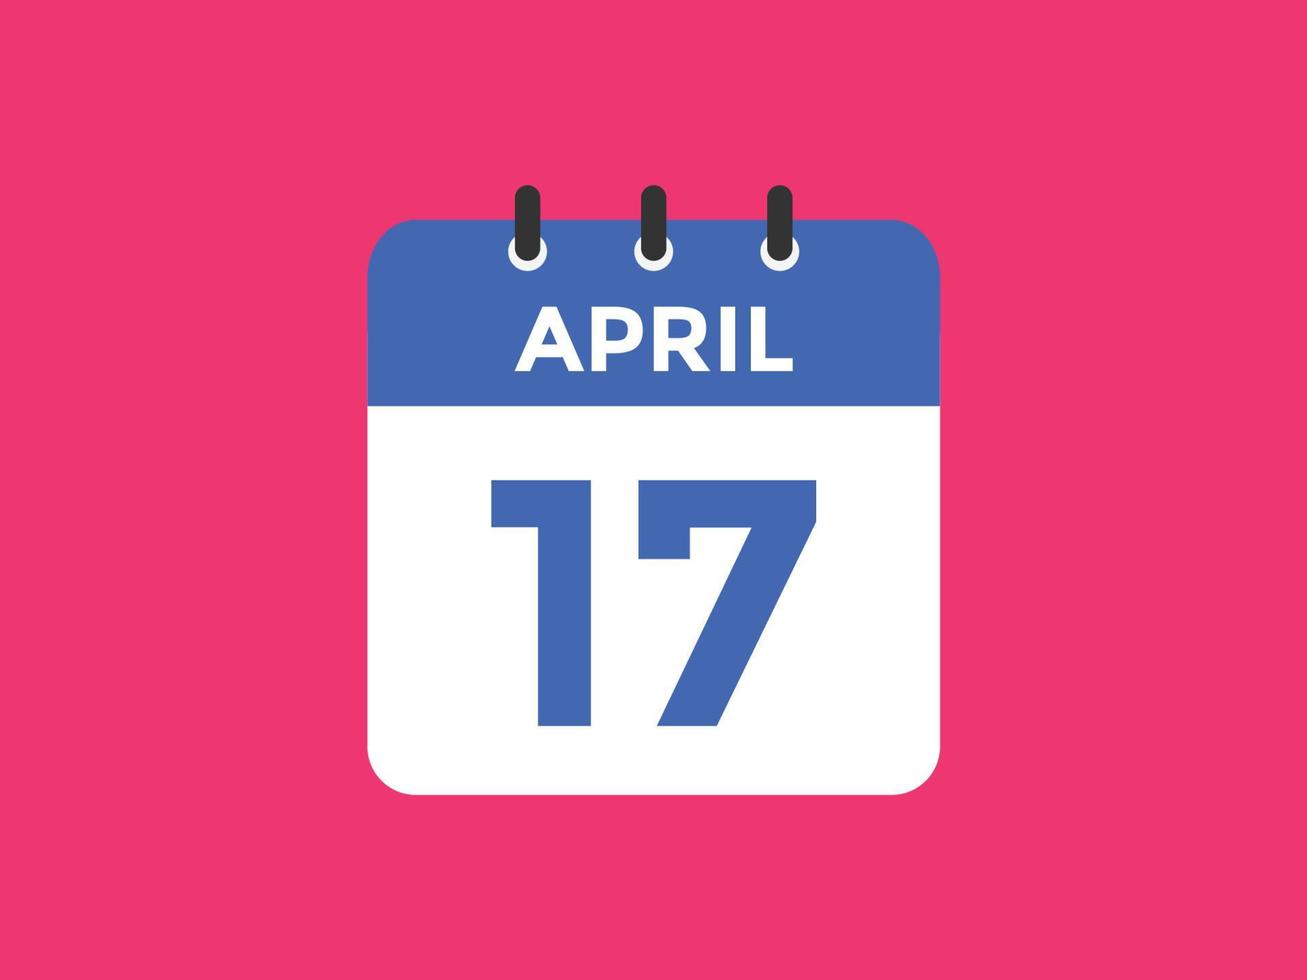 april 17 calendar reminder. 17th april daily calendar icon template. Calendar 17th april icon Design template. Vector illustration